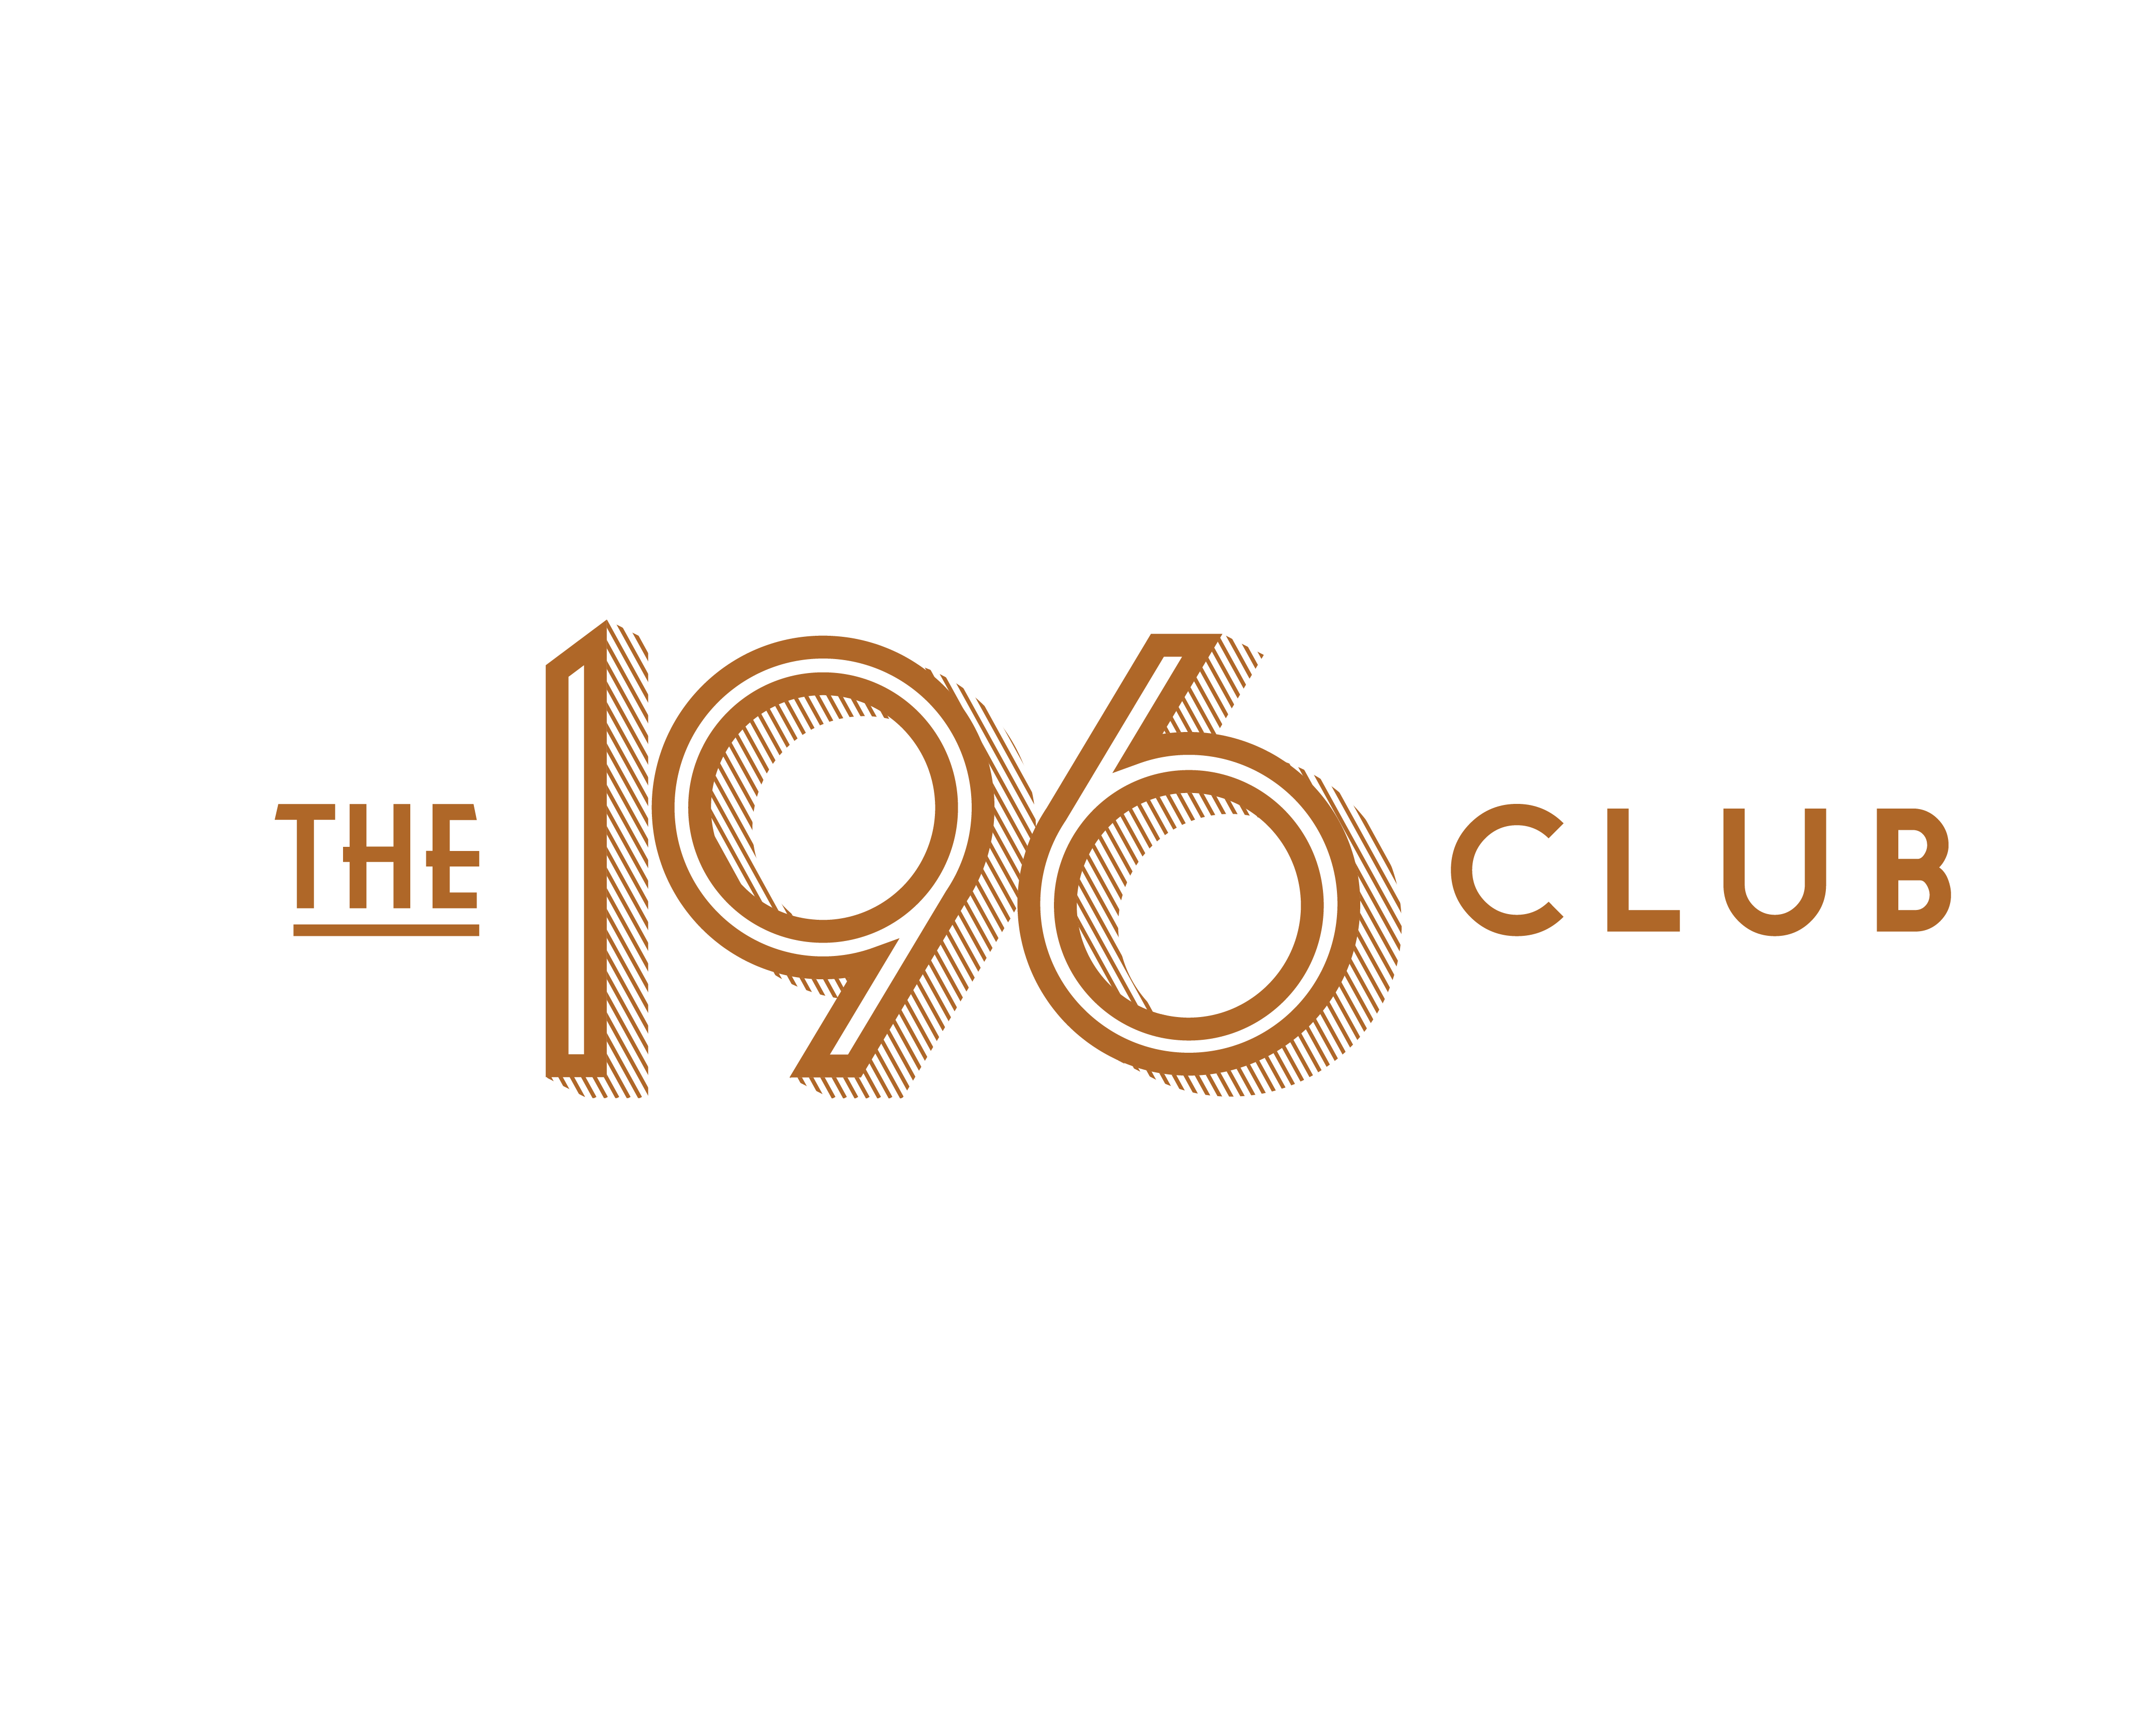 the 196 club logo